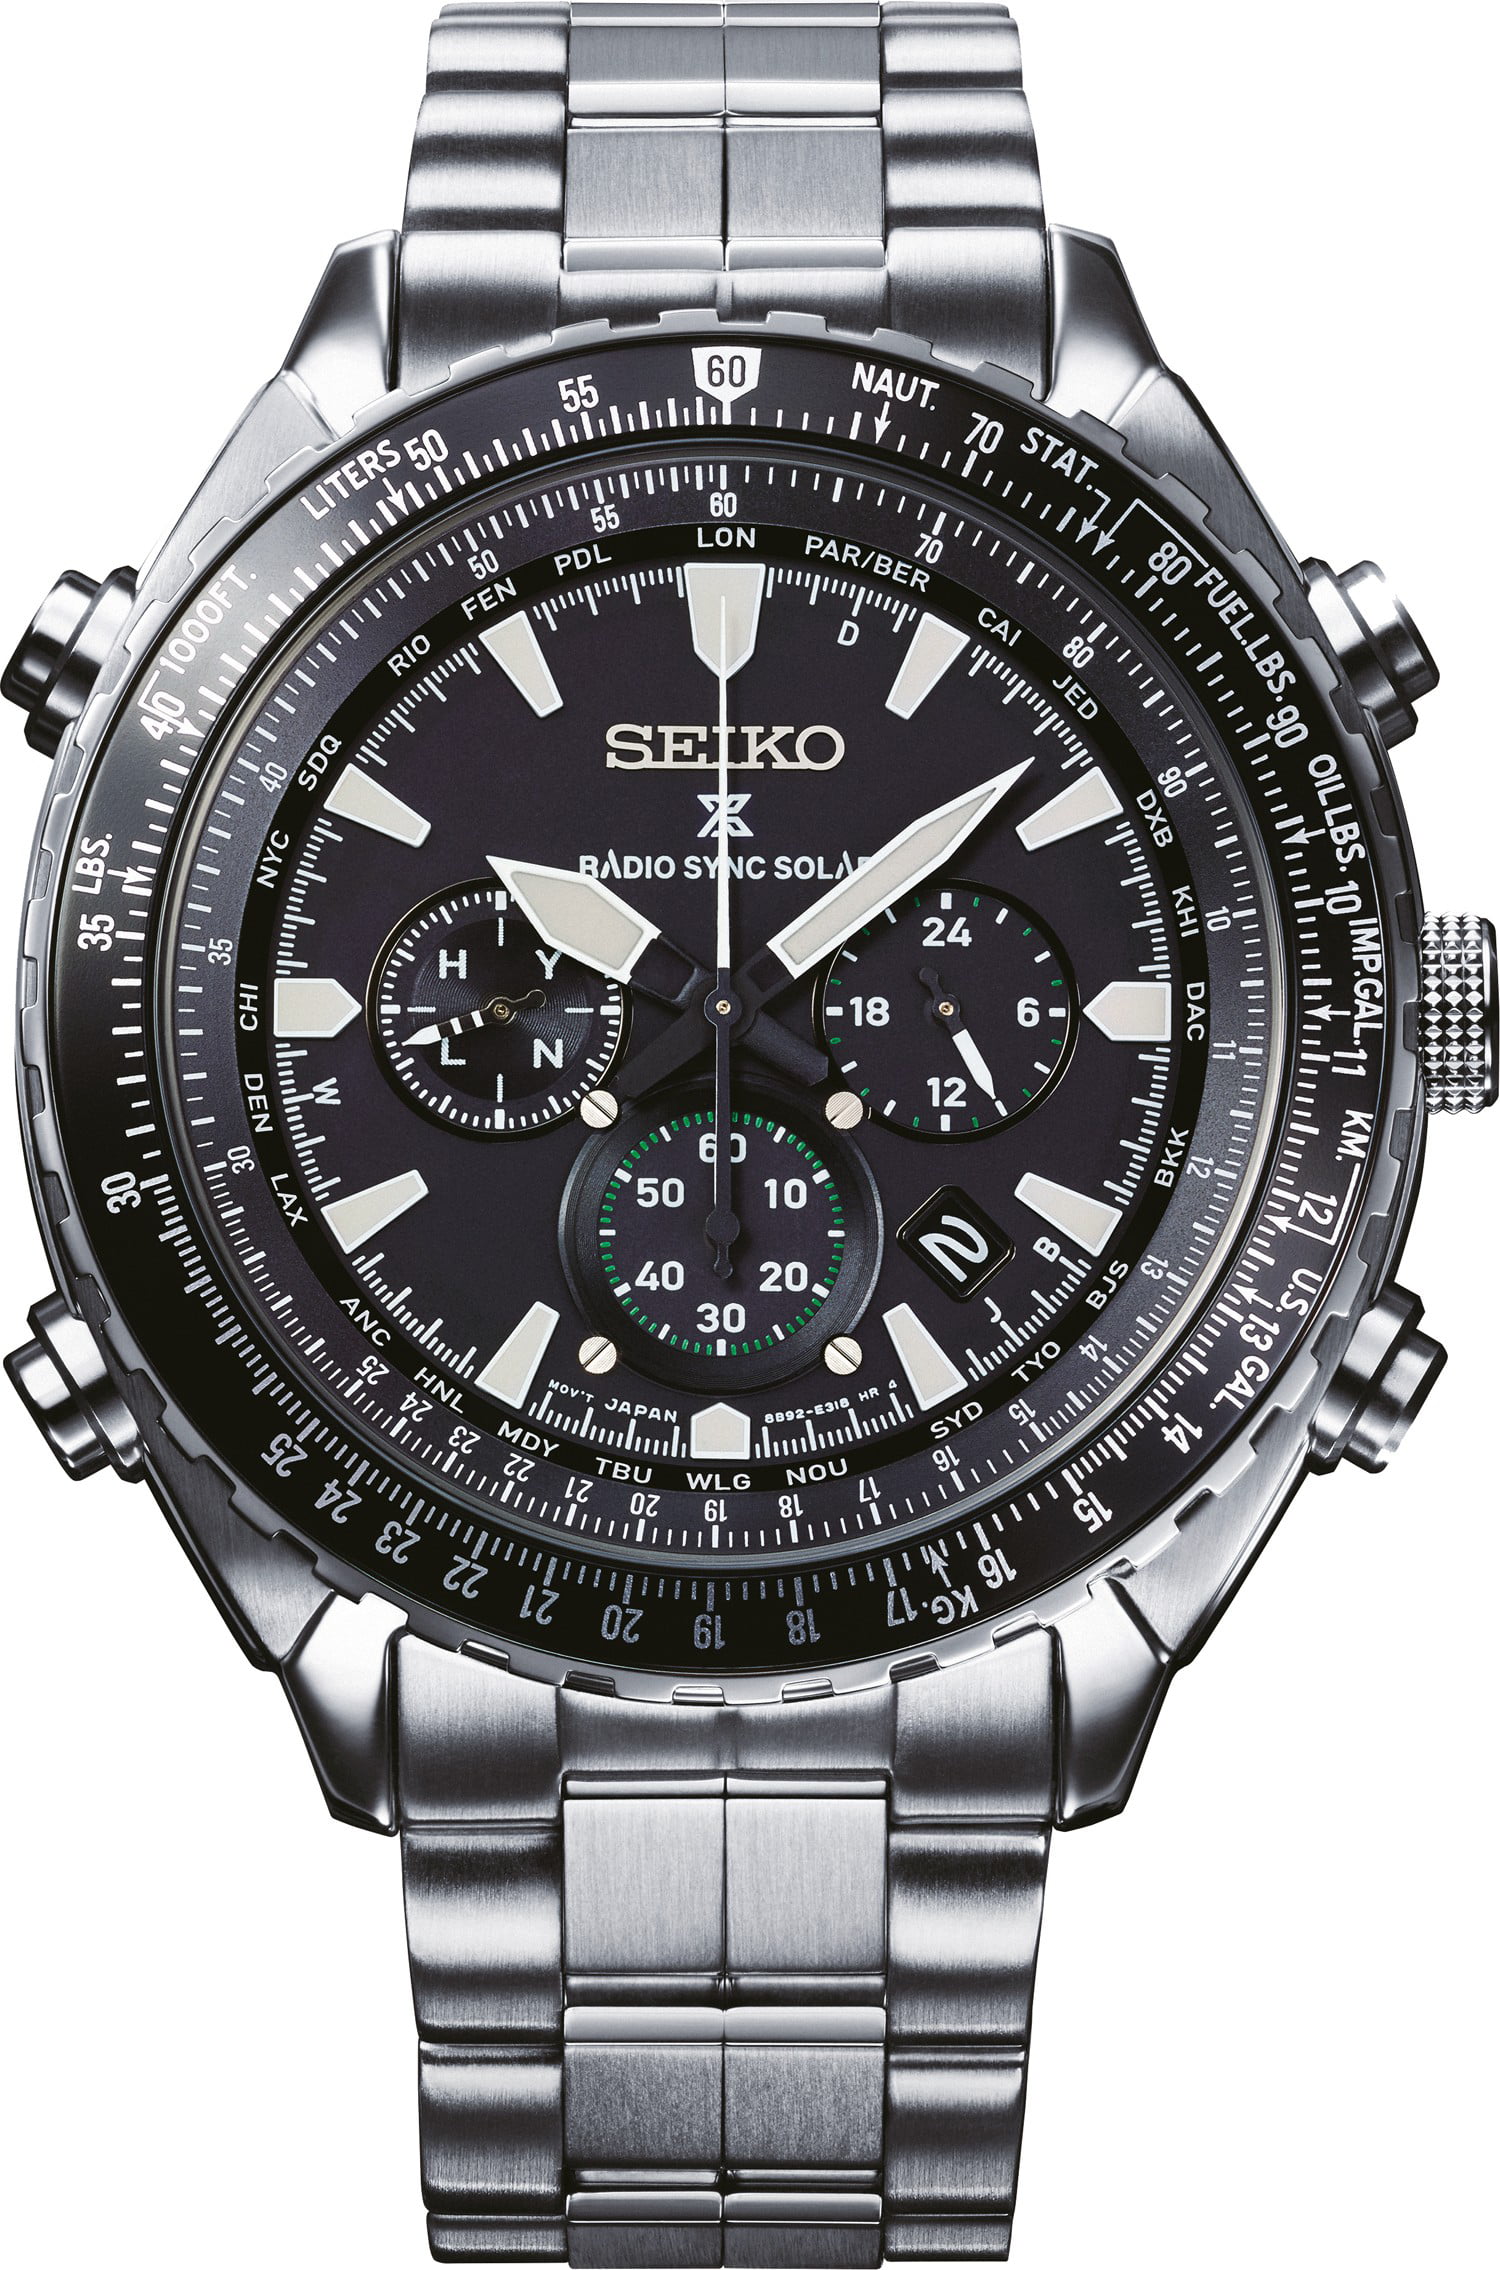 Seiko Men's Prospex Radio Sync Solar Pilot Watch SSG001P1 